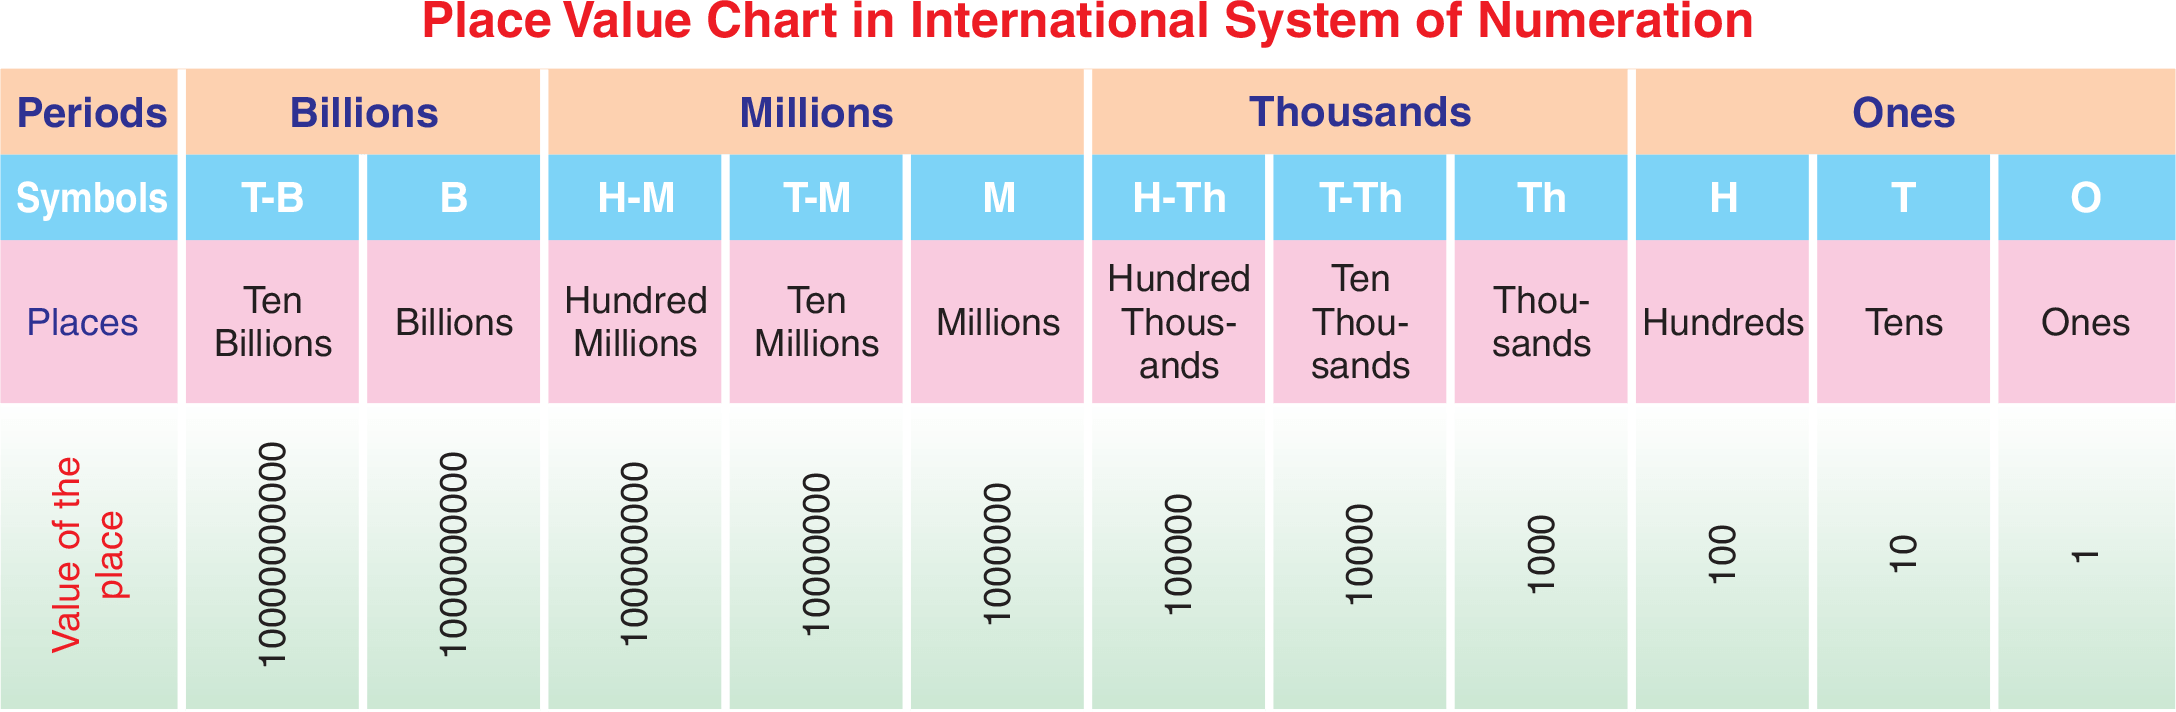 International System of Numeration